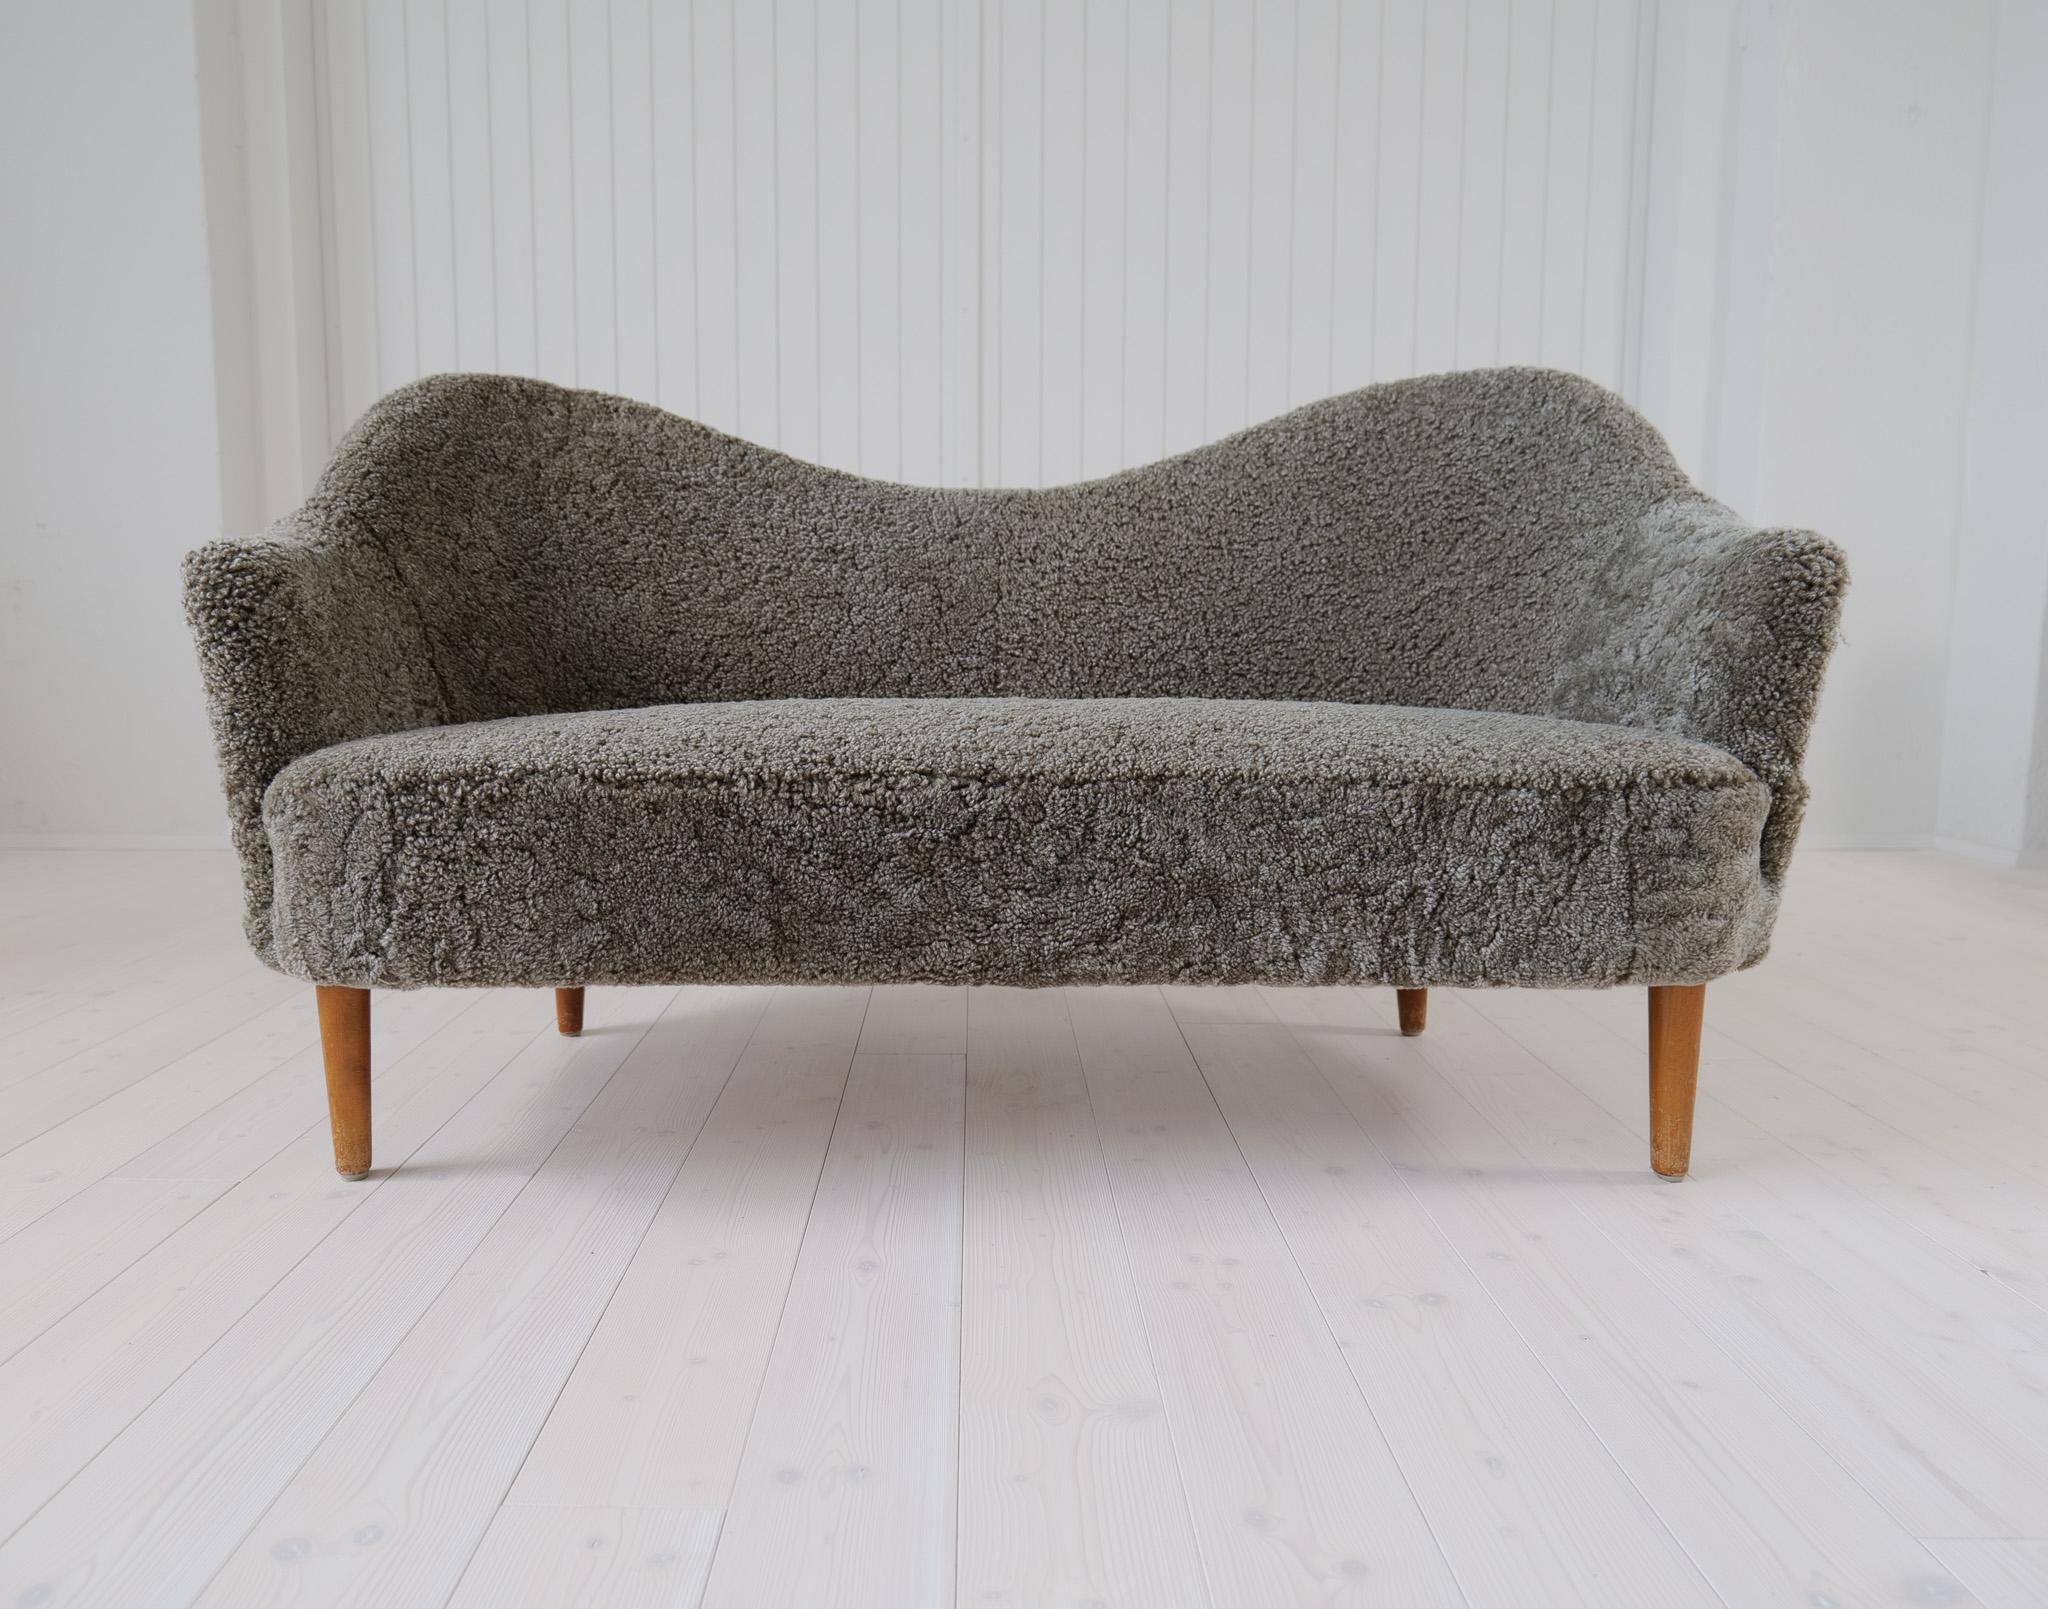 Swedish Midcentury Modern Sheepskin/Shearling Sofa Model 'Samspel